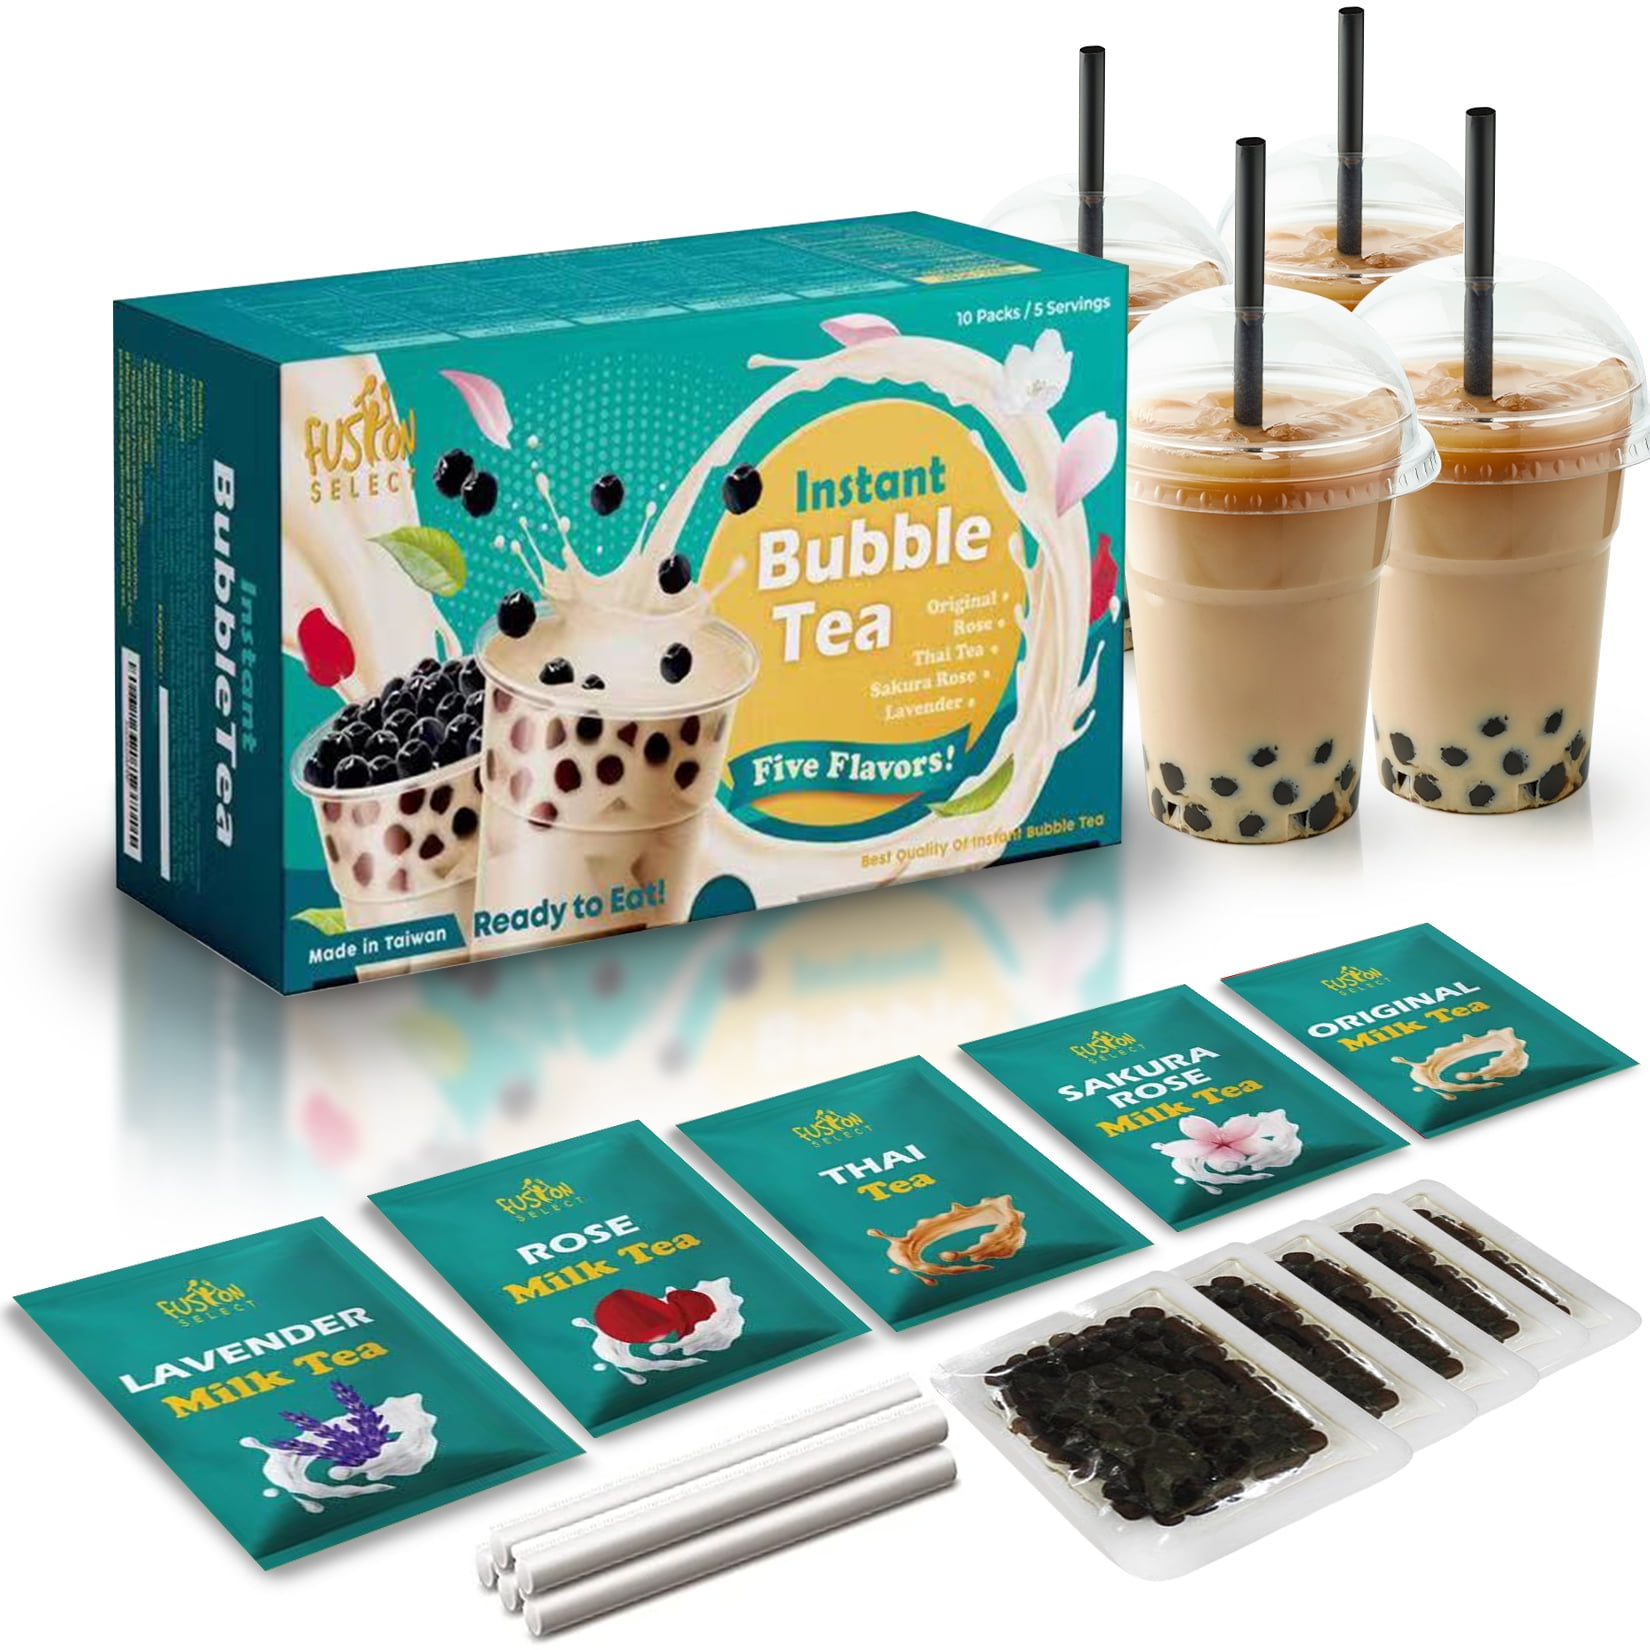 Fusion Select Authentic Bubble Tea Kit (5 Packs) Bubble Tea Drink Boba  Tapioca Pearl Straws Most Popular Bubble Tea Flavors Milk Tea Rose Lavender